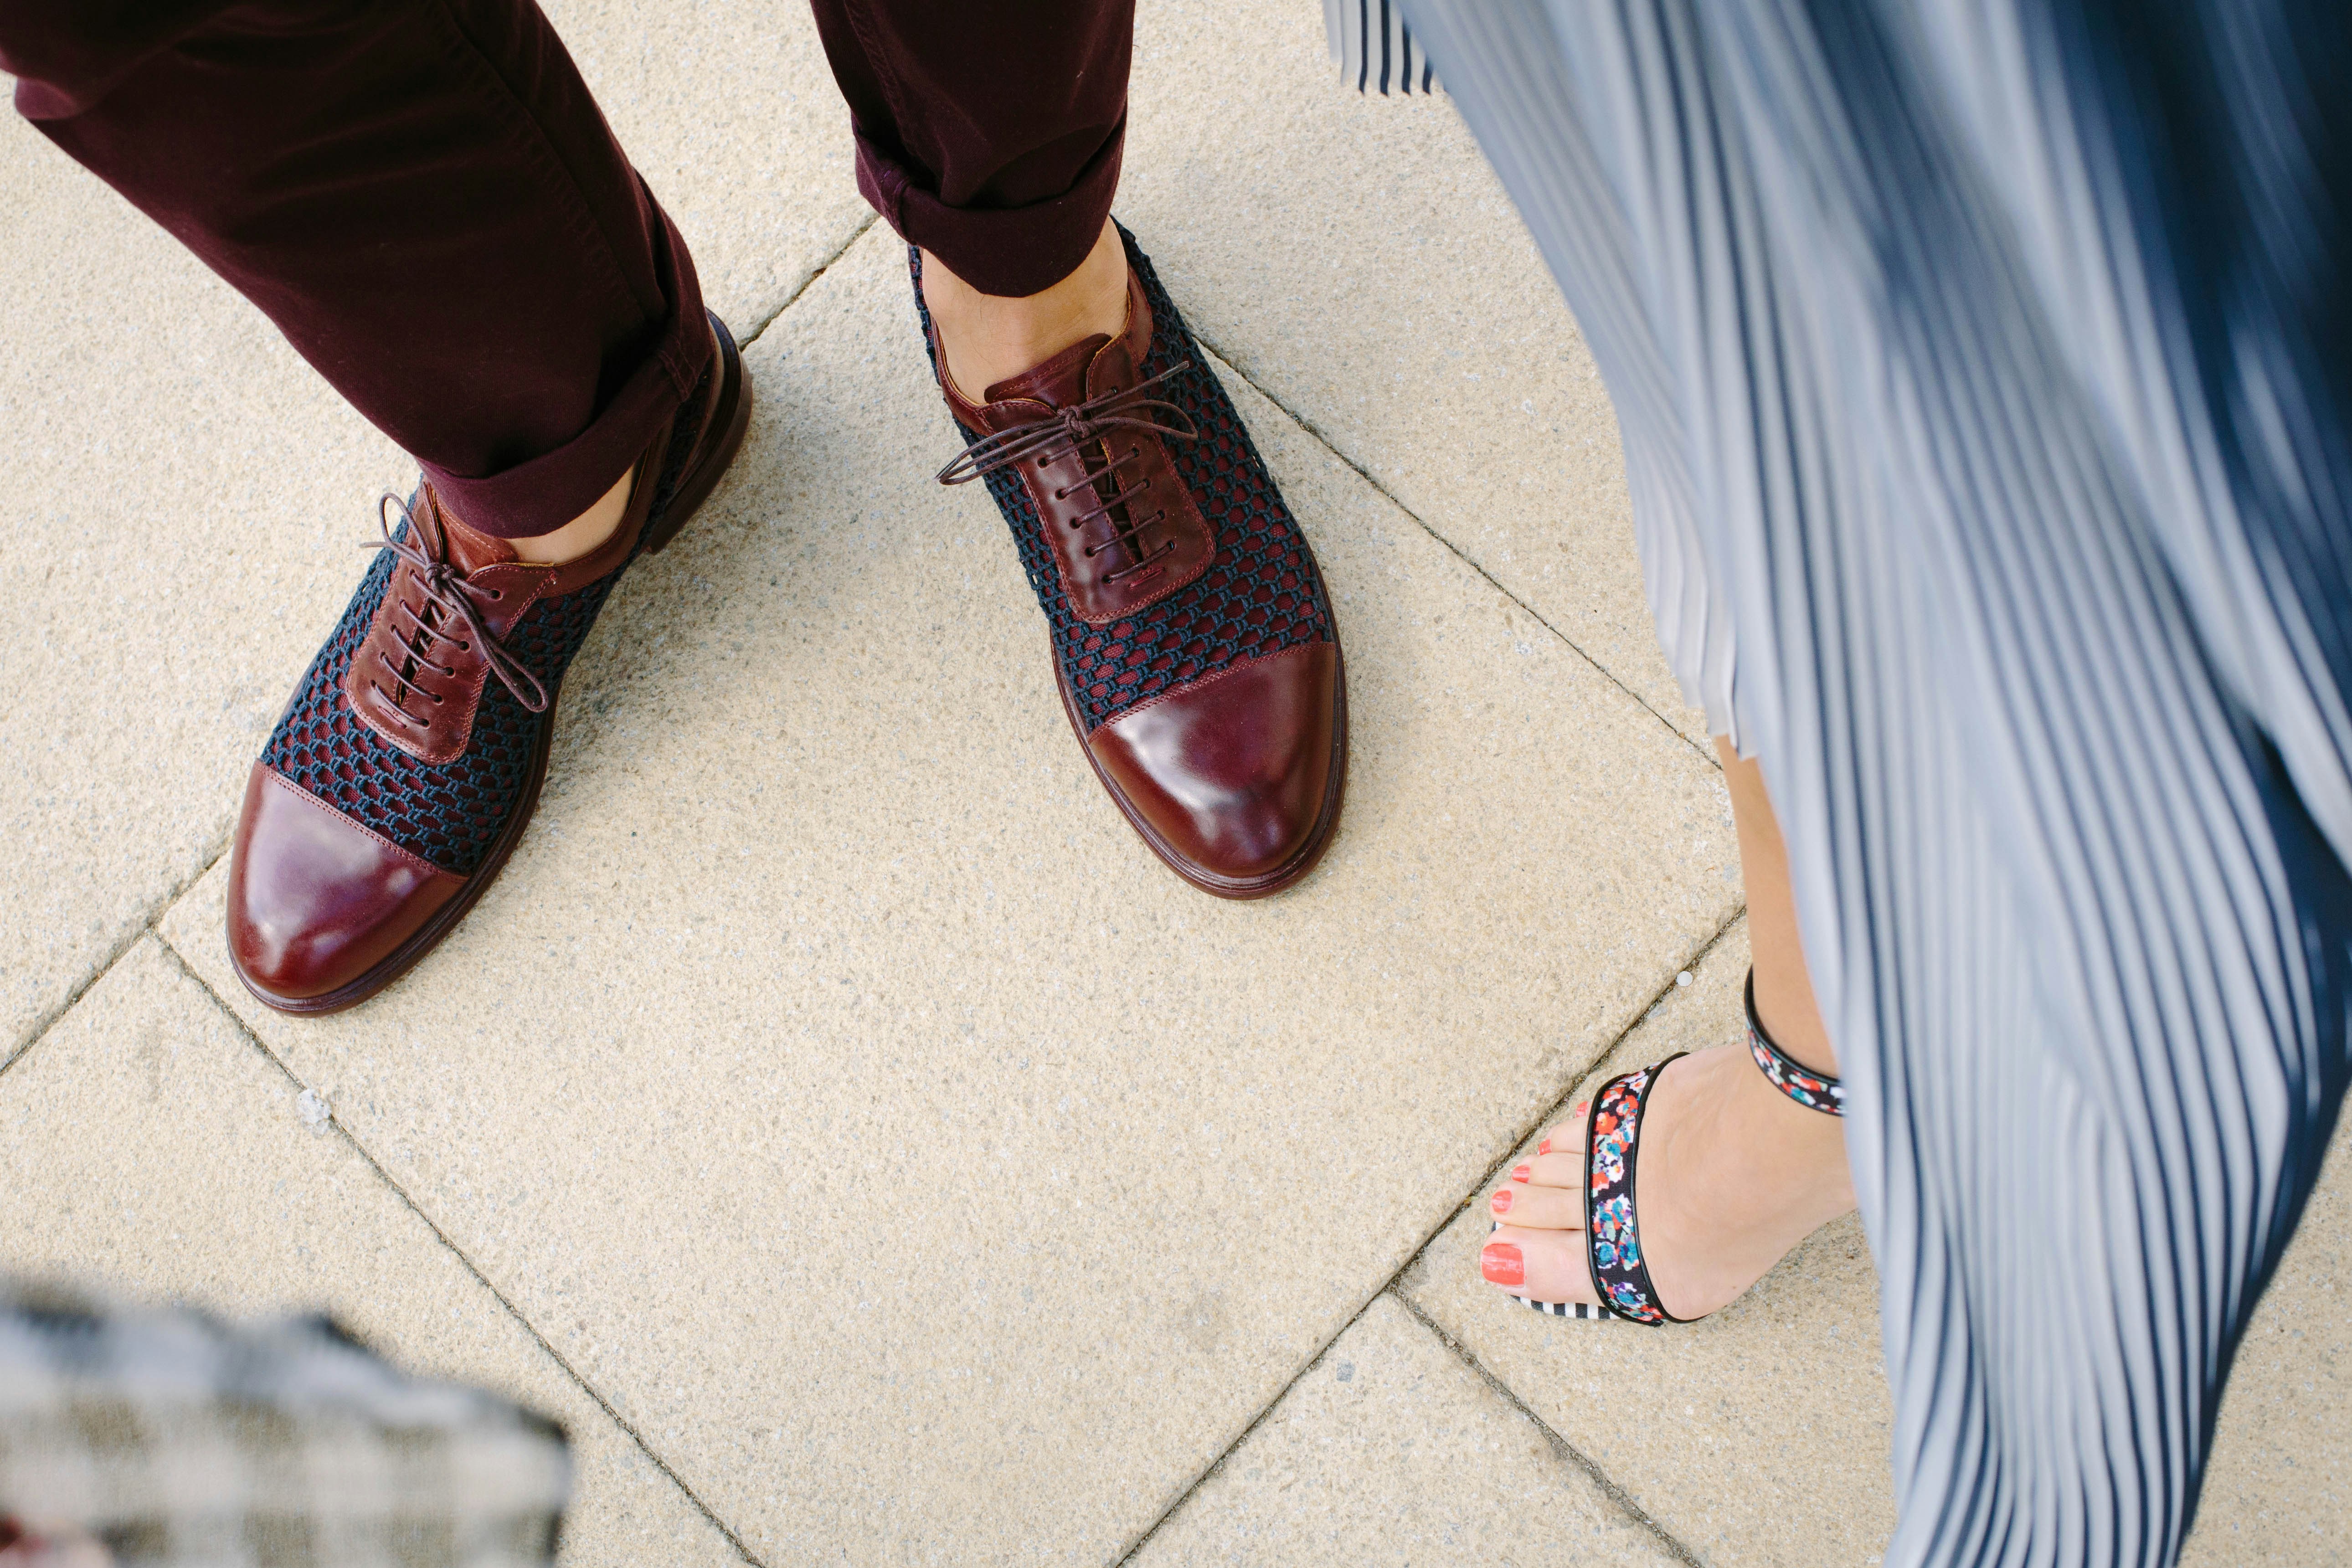 Stylish couple’s footwear